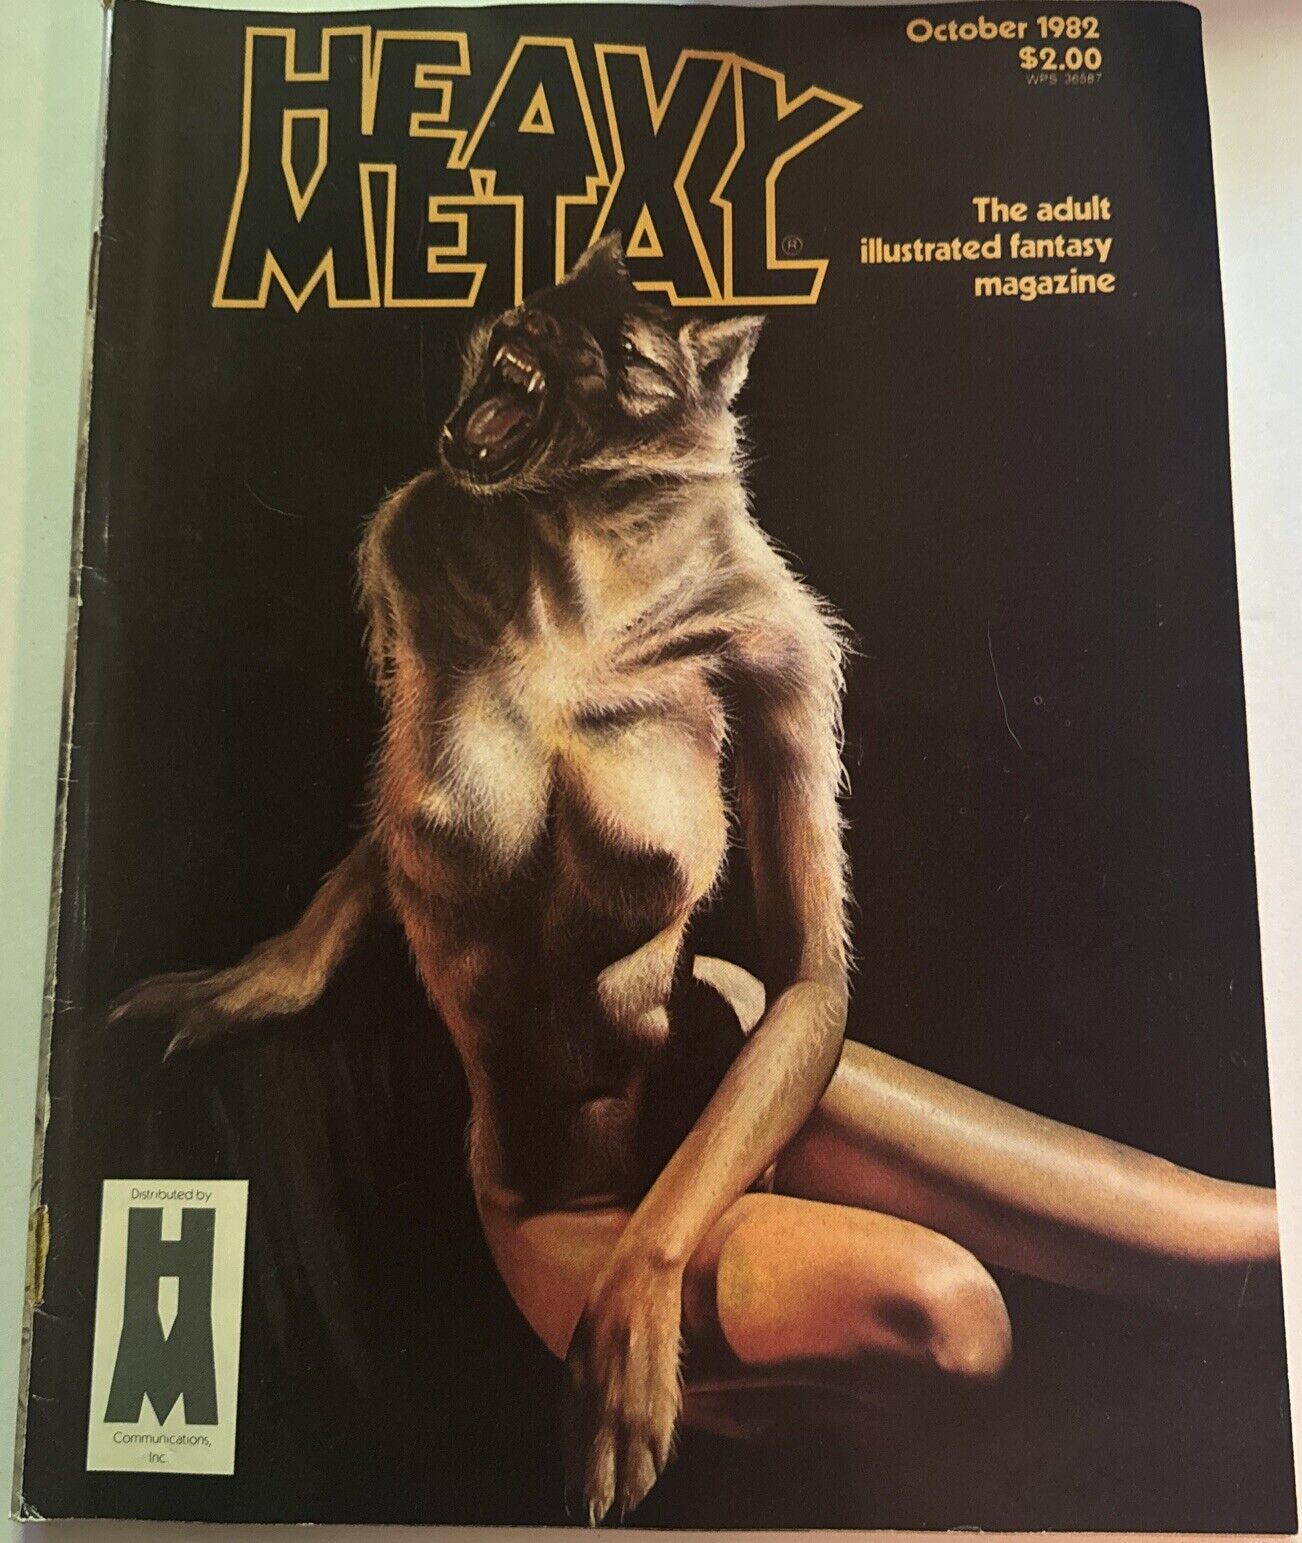 Heavy Metal V. 6 #7 October 1982 The Adult Illustrated Fantasy Magazine